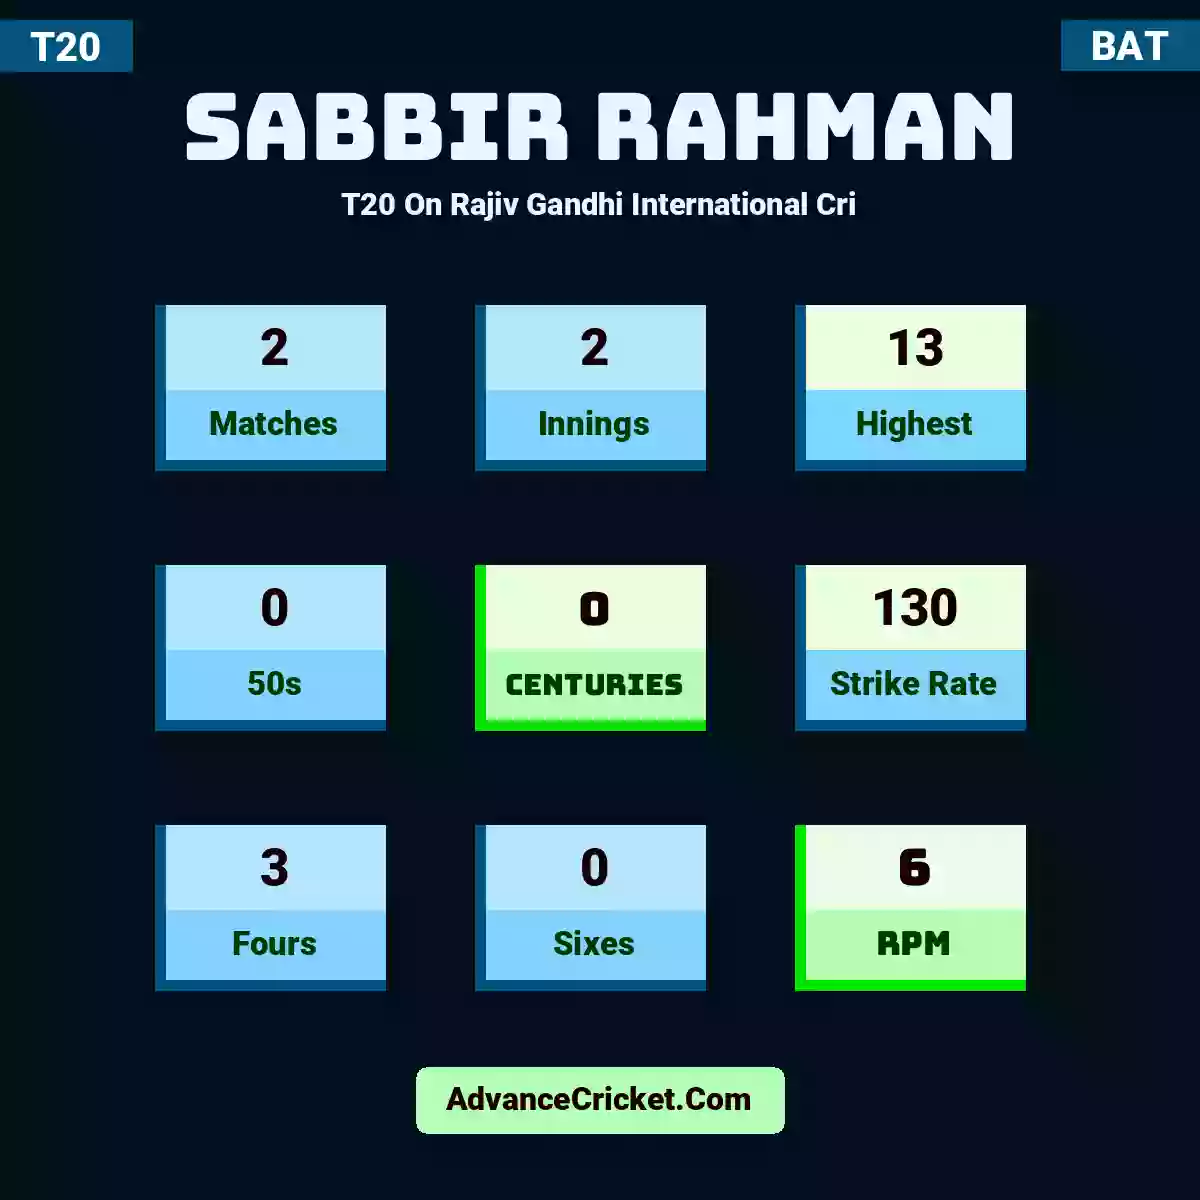 Sabbir Rahman T20  On Rajiv Gandhi International Cri, Sabbir Rahman played 2 matches, scored 13 runs as highest, 0 half-centuries, and 0 centuries, with a strike rate of 130. S.Rahman hit 3 fours and 0 sixes, with an RPM of 6.